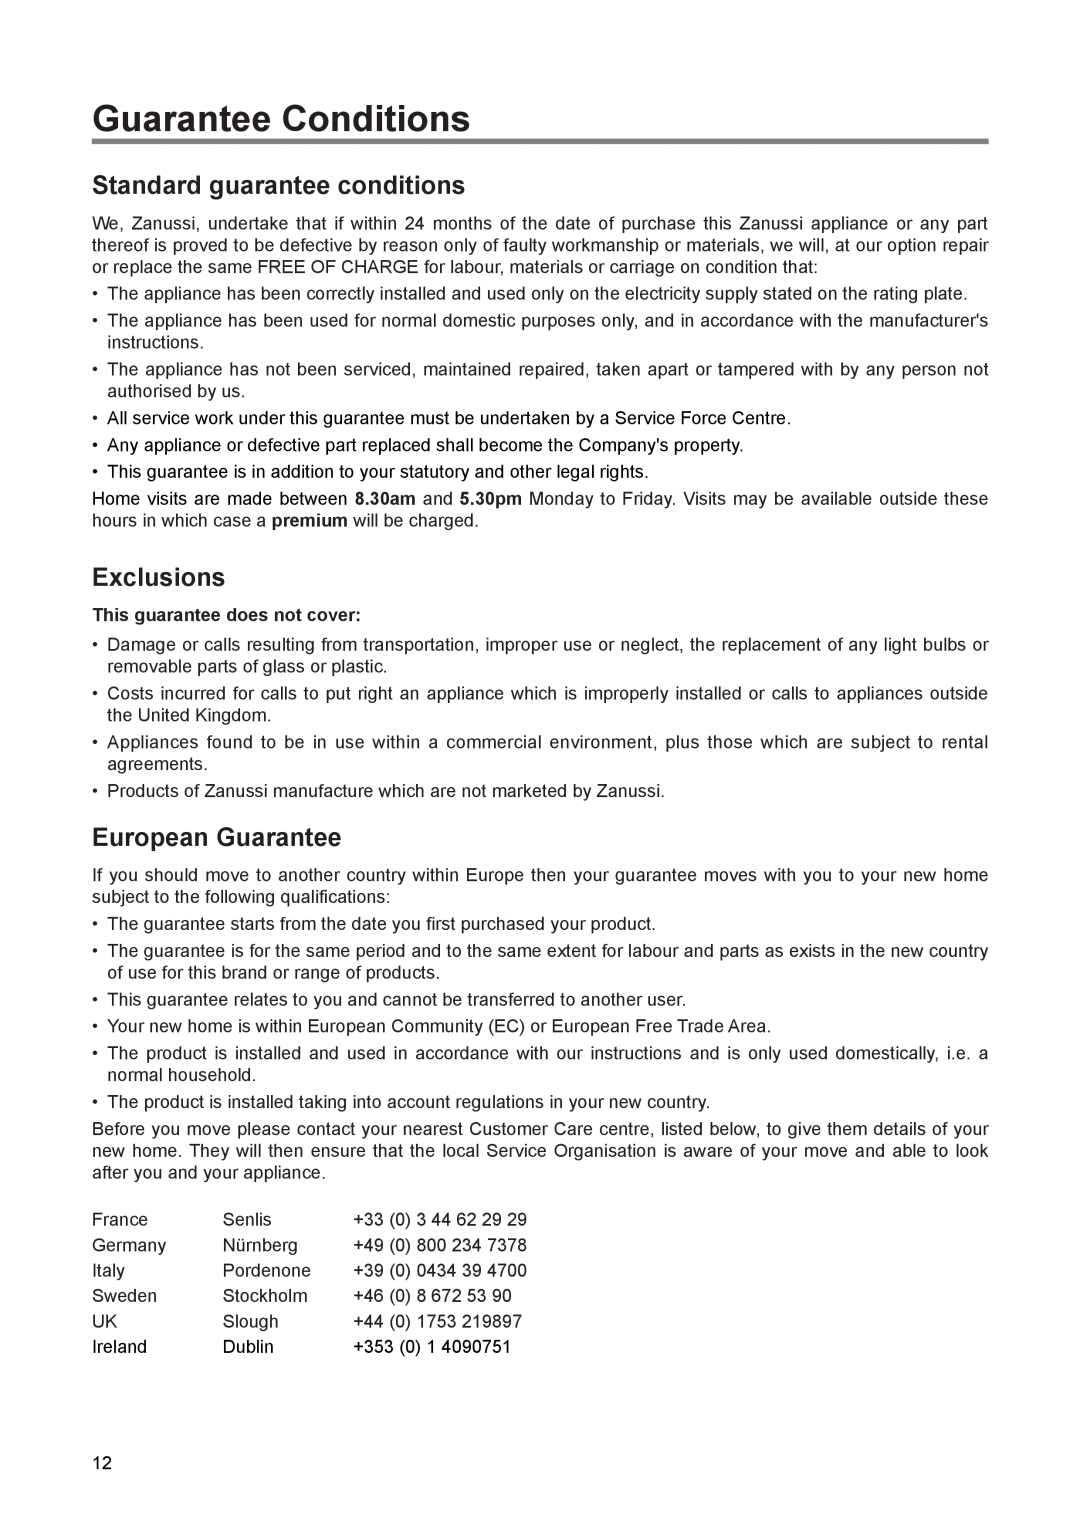 Zanussi ZI 9224 manual Guarantee Conditions, Standard guarantee conditions, Exclusions, European Guarantee 